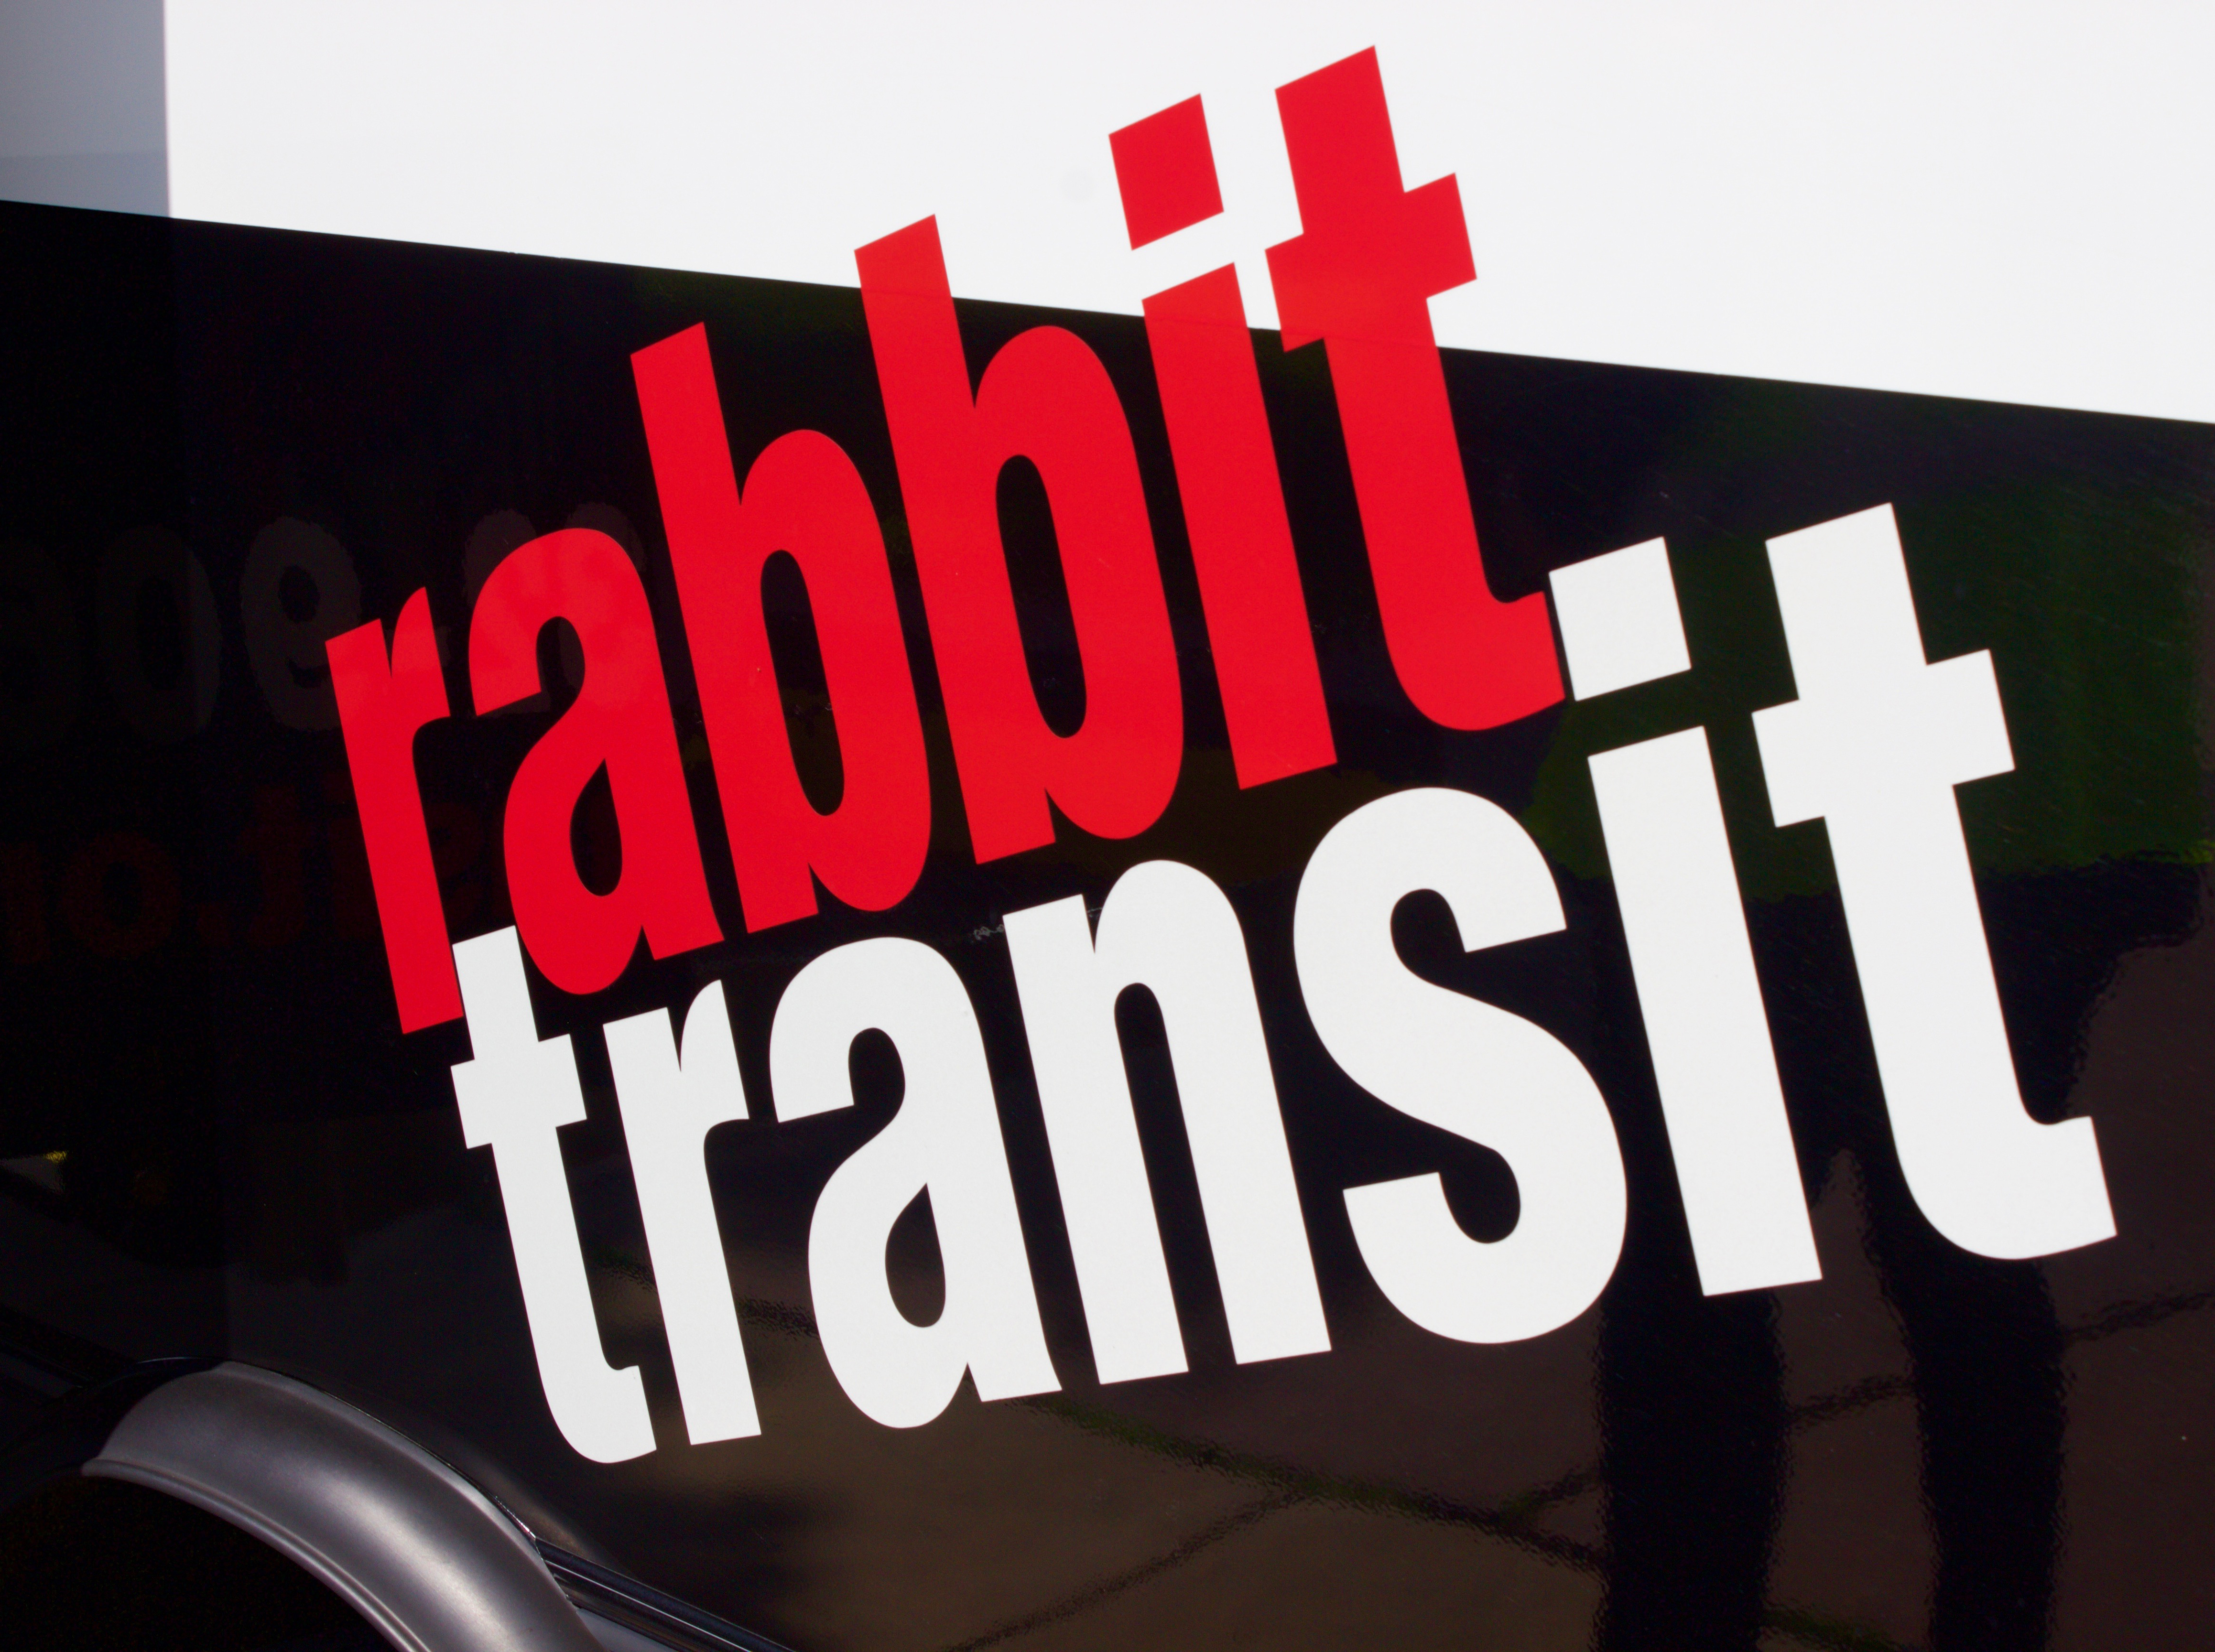 rabbitTRANSIT logo on vehicle